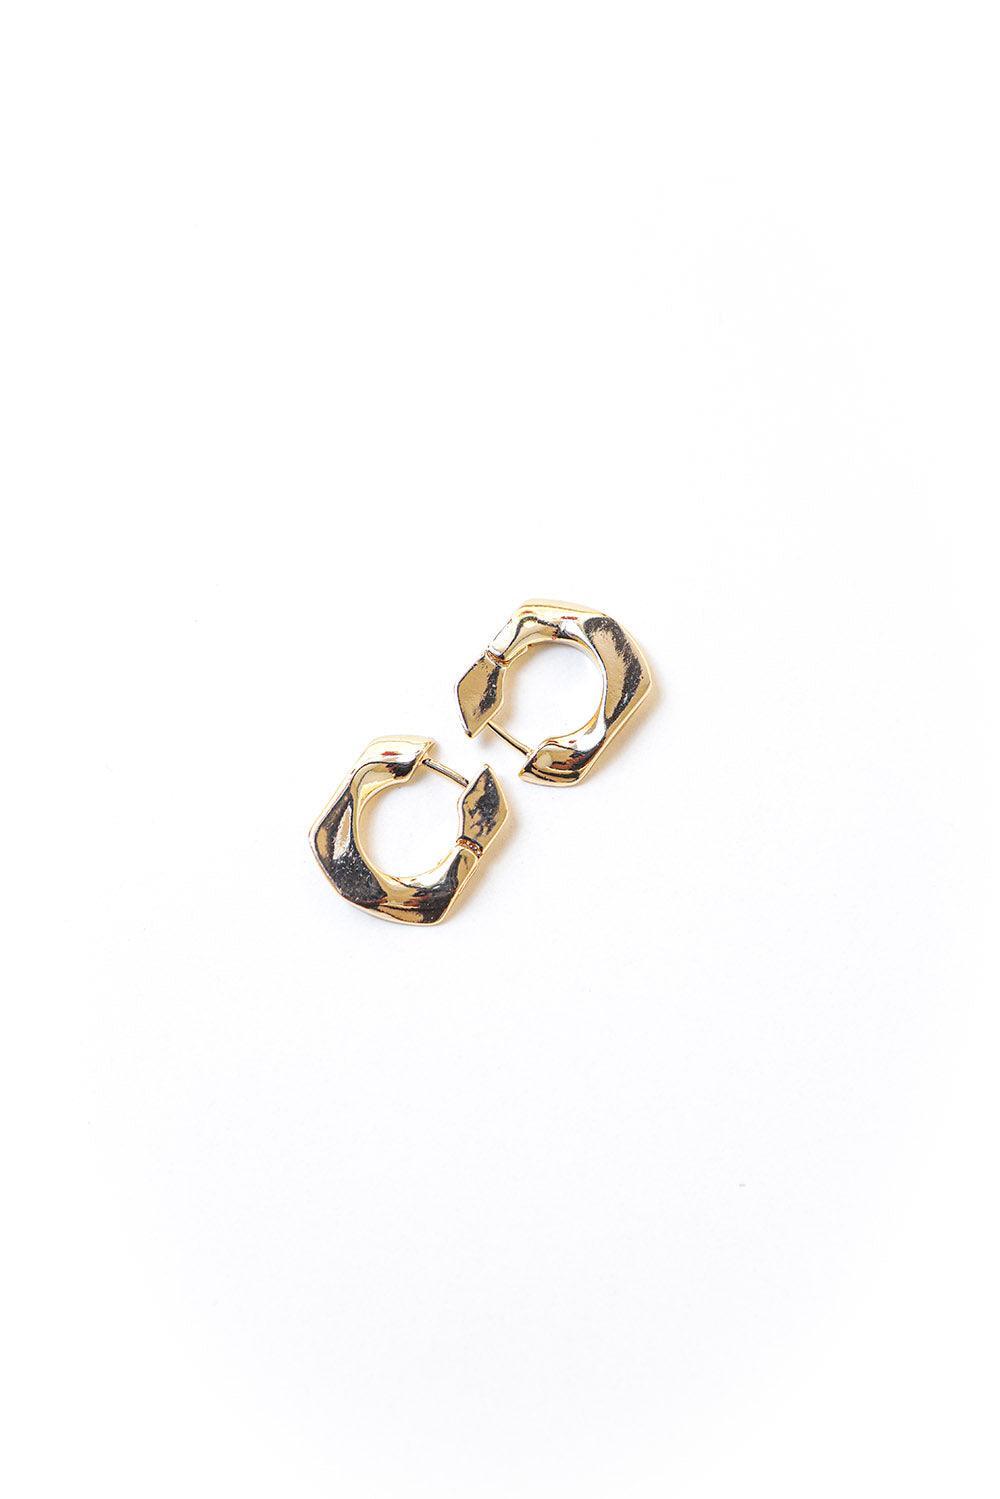 Gold tone mini huggie earrings with secure hinge enclosure. 20mm in diameter